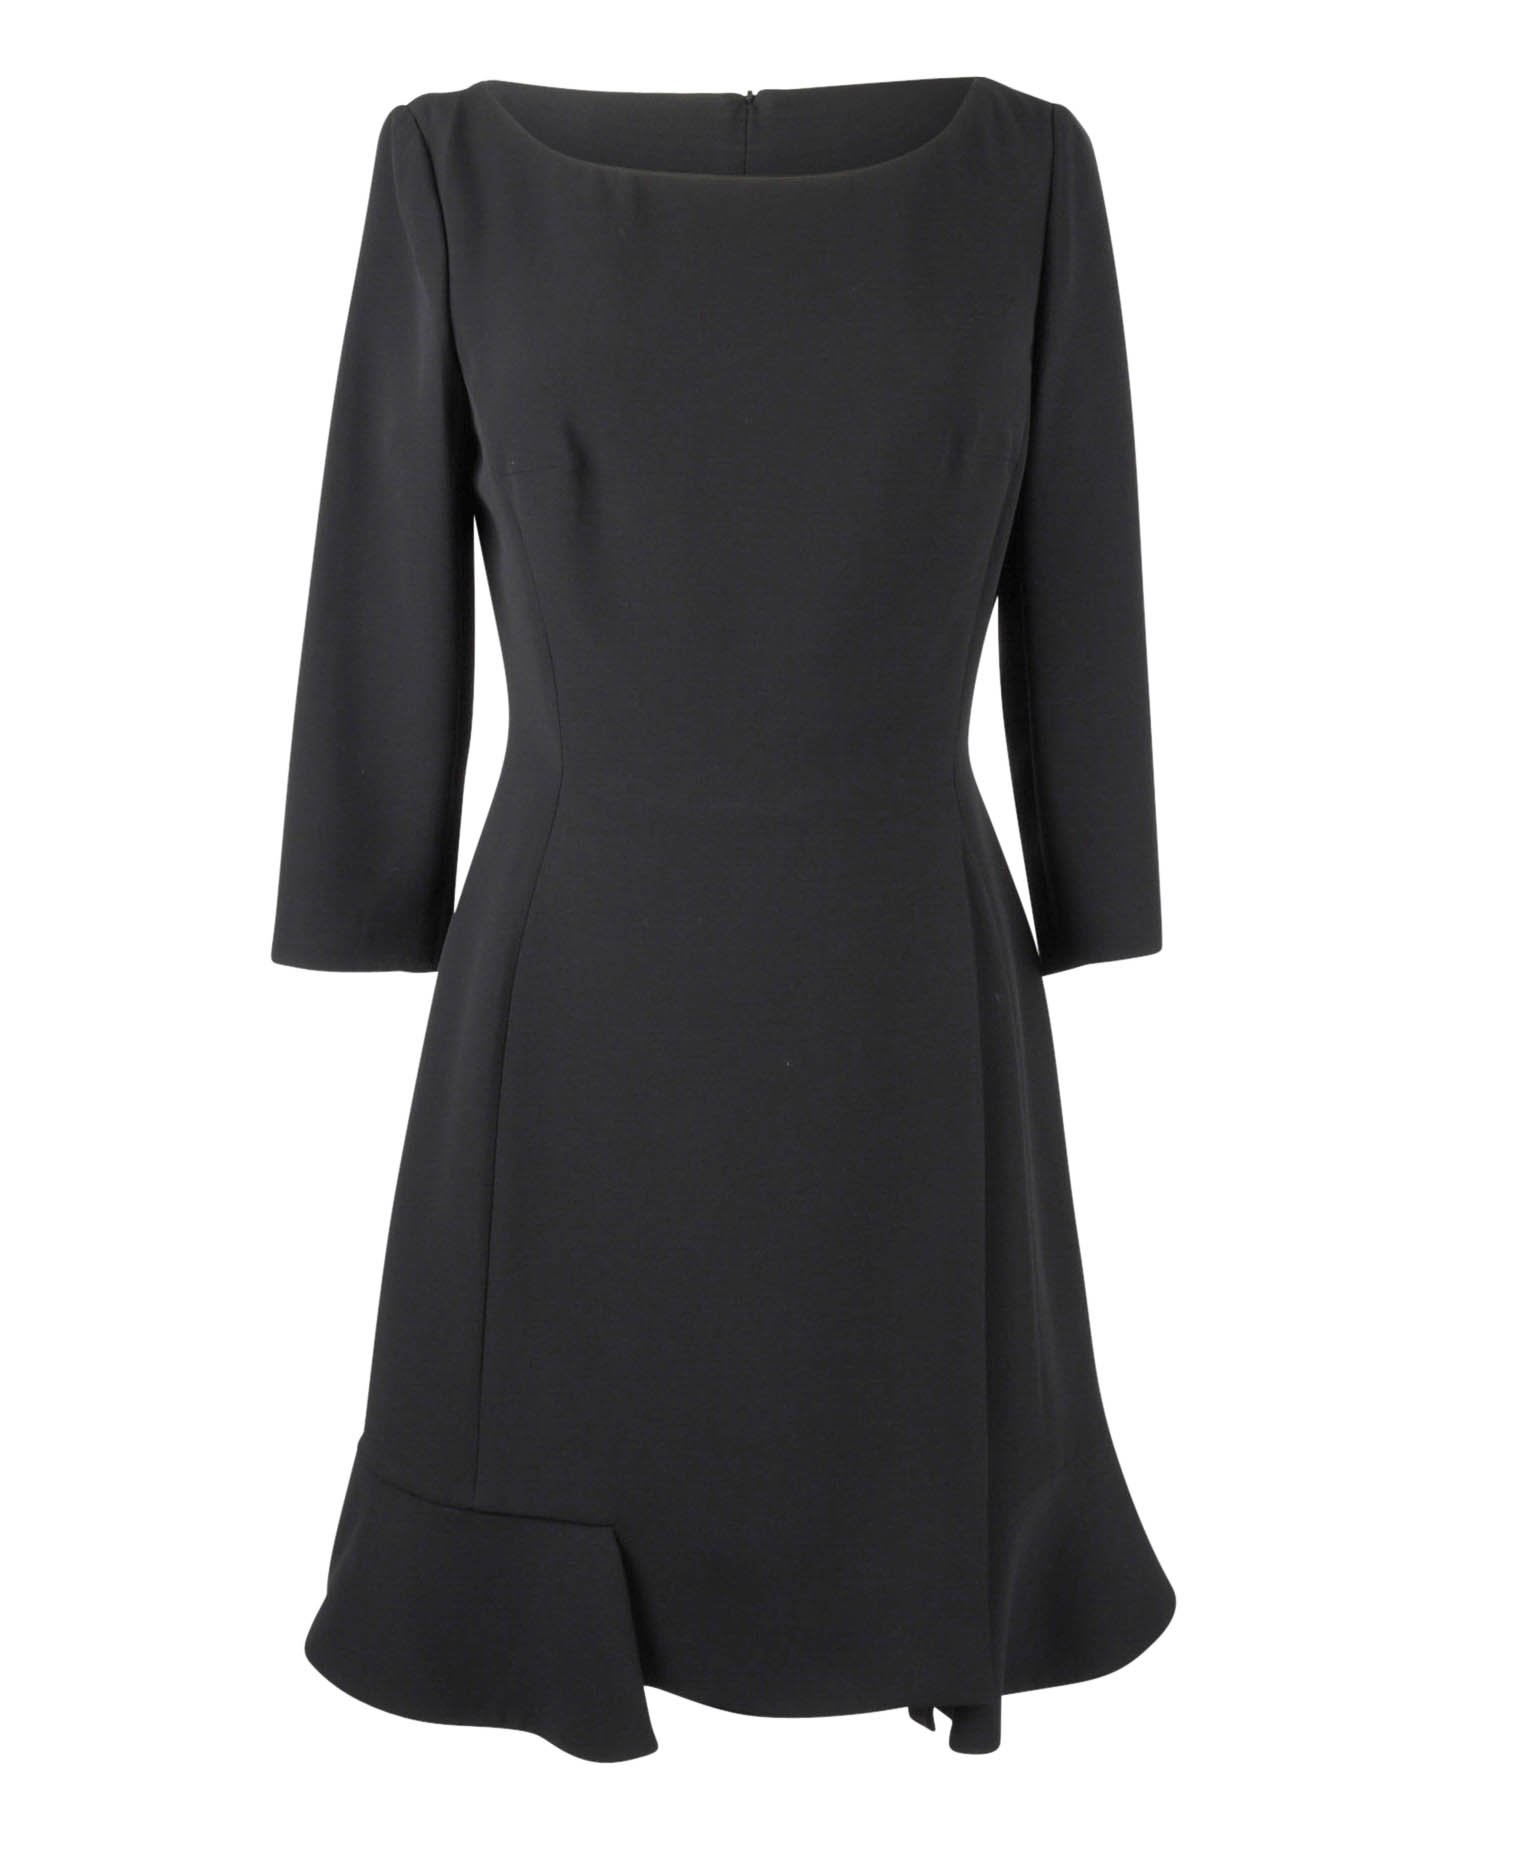 Christian Dior Black Dress Ruffle Hem 3/4 Sleeve 8